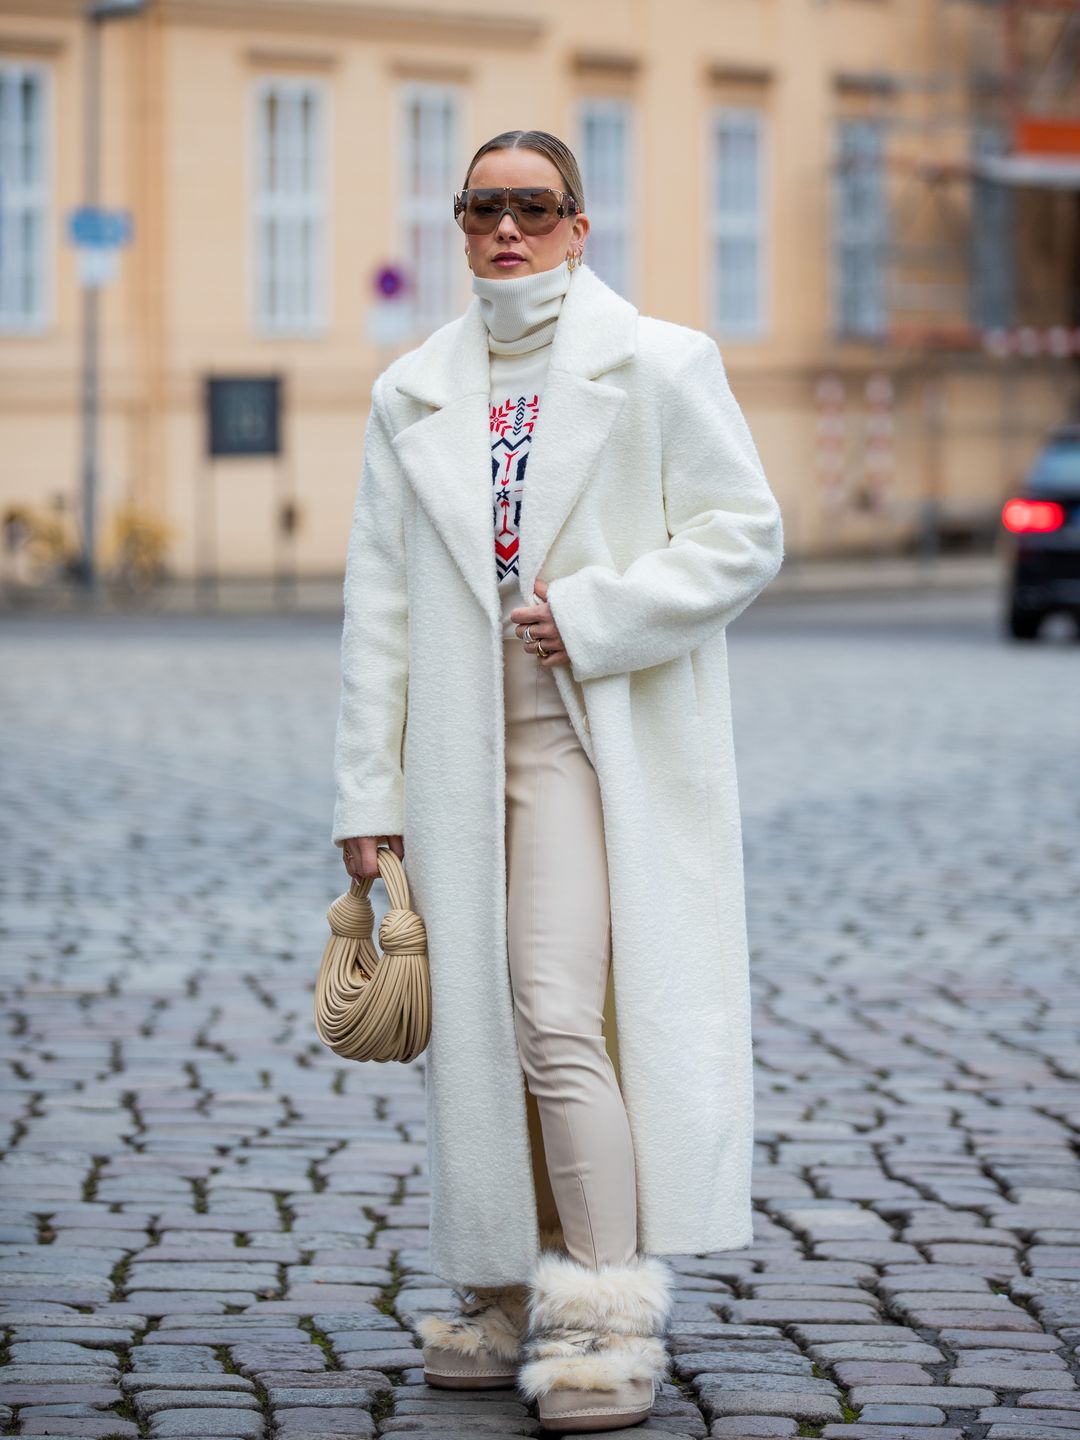 Tina Haase seen wearing faux fur snow boots in Berlin.